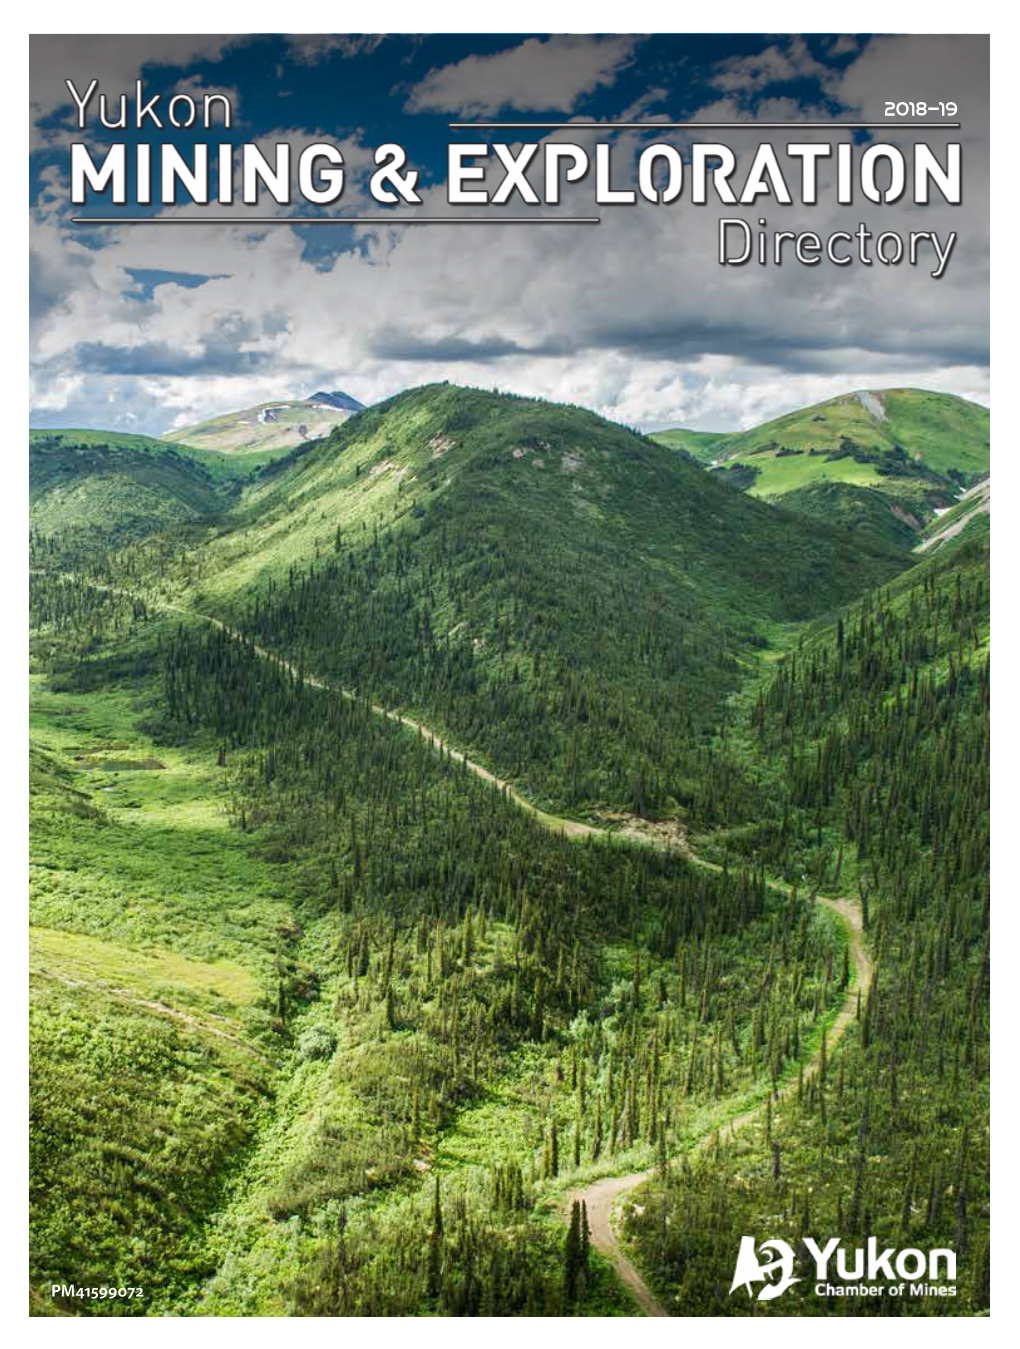 Yukon Mining and Exploration Directory 2018-2019